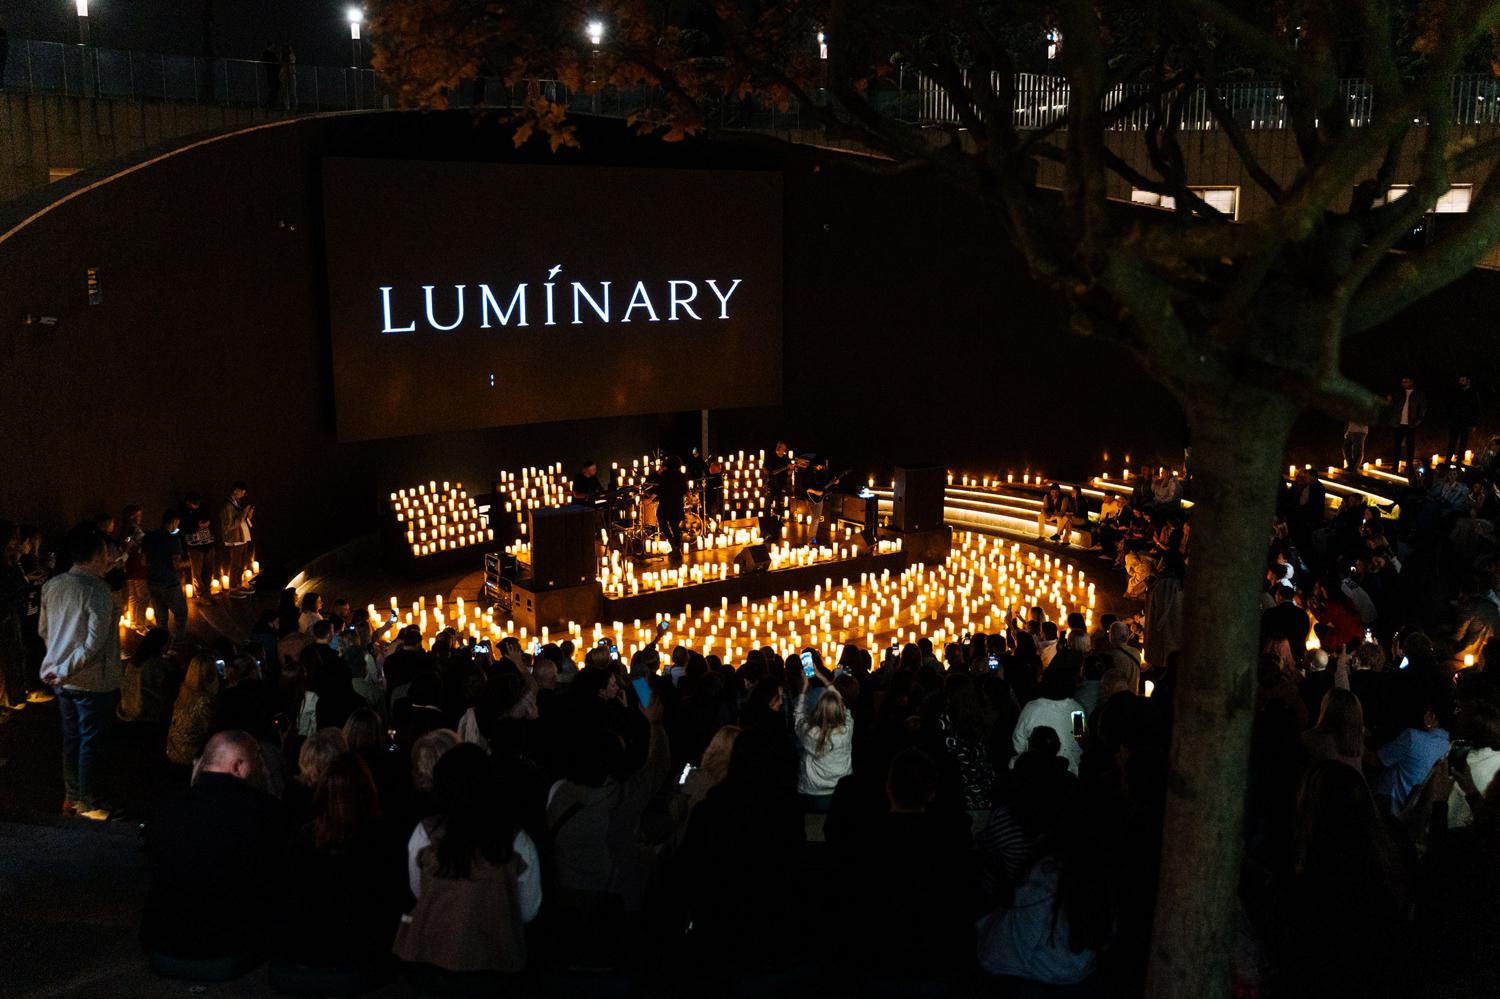 Luminary 1000 свечей. Концерт Люминари 1000 свечей. Luminary 1000 свечей фото. Luminary Ессентуки 1000 свечей.